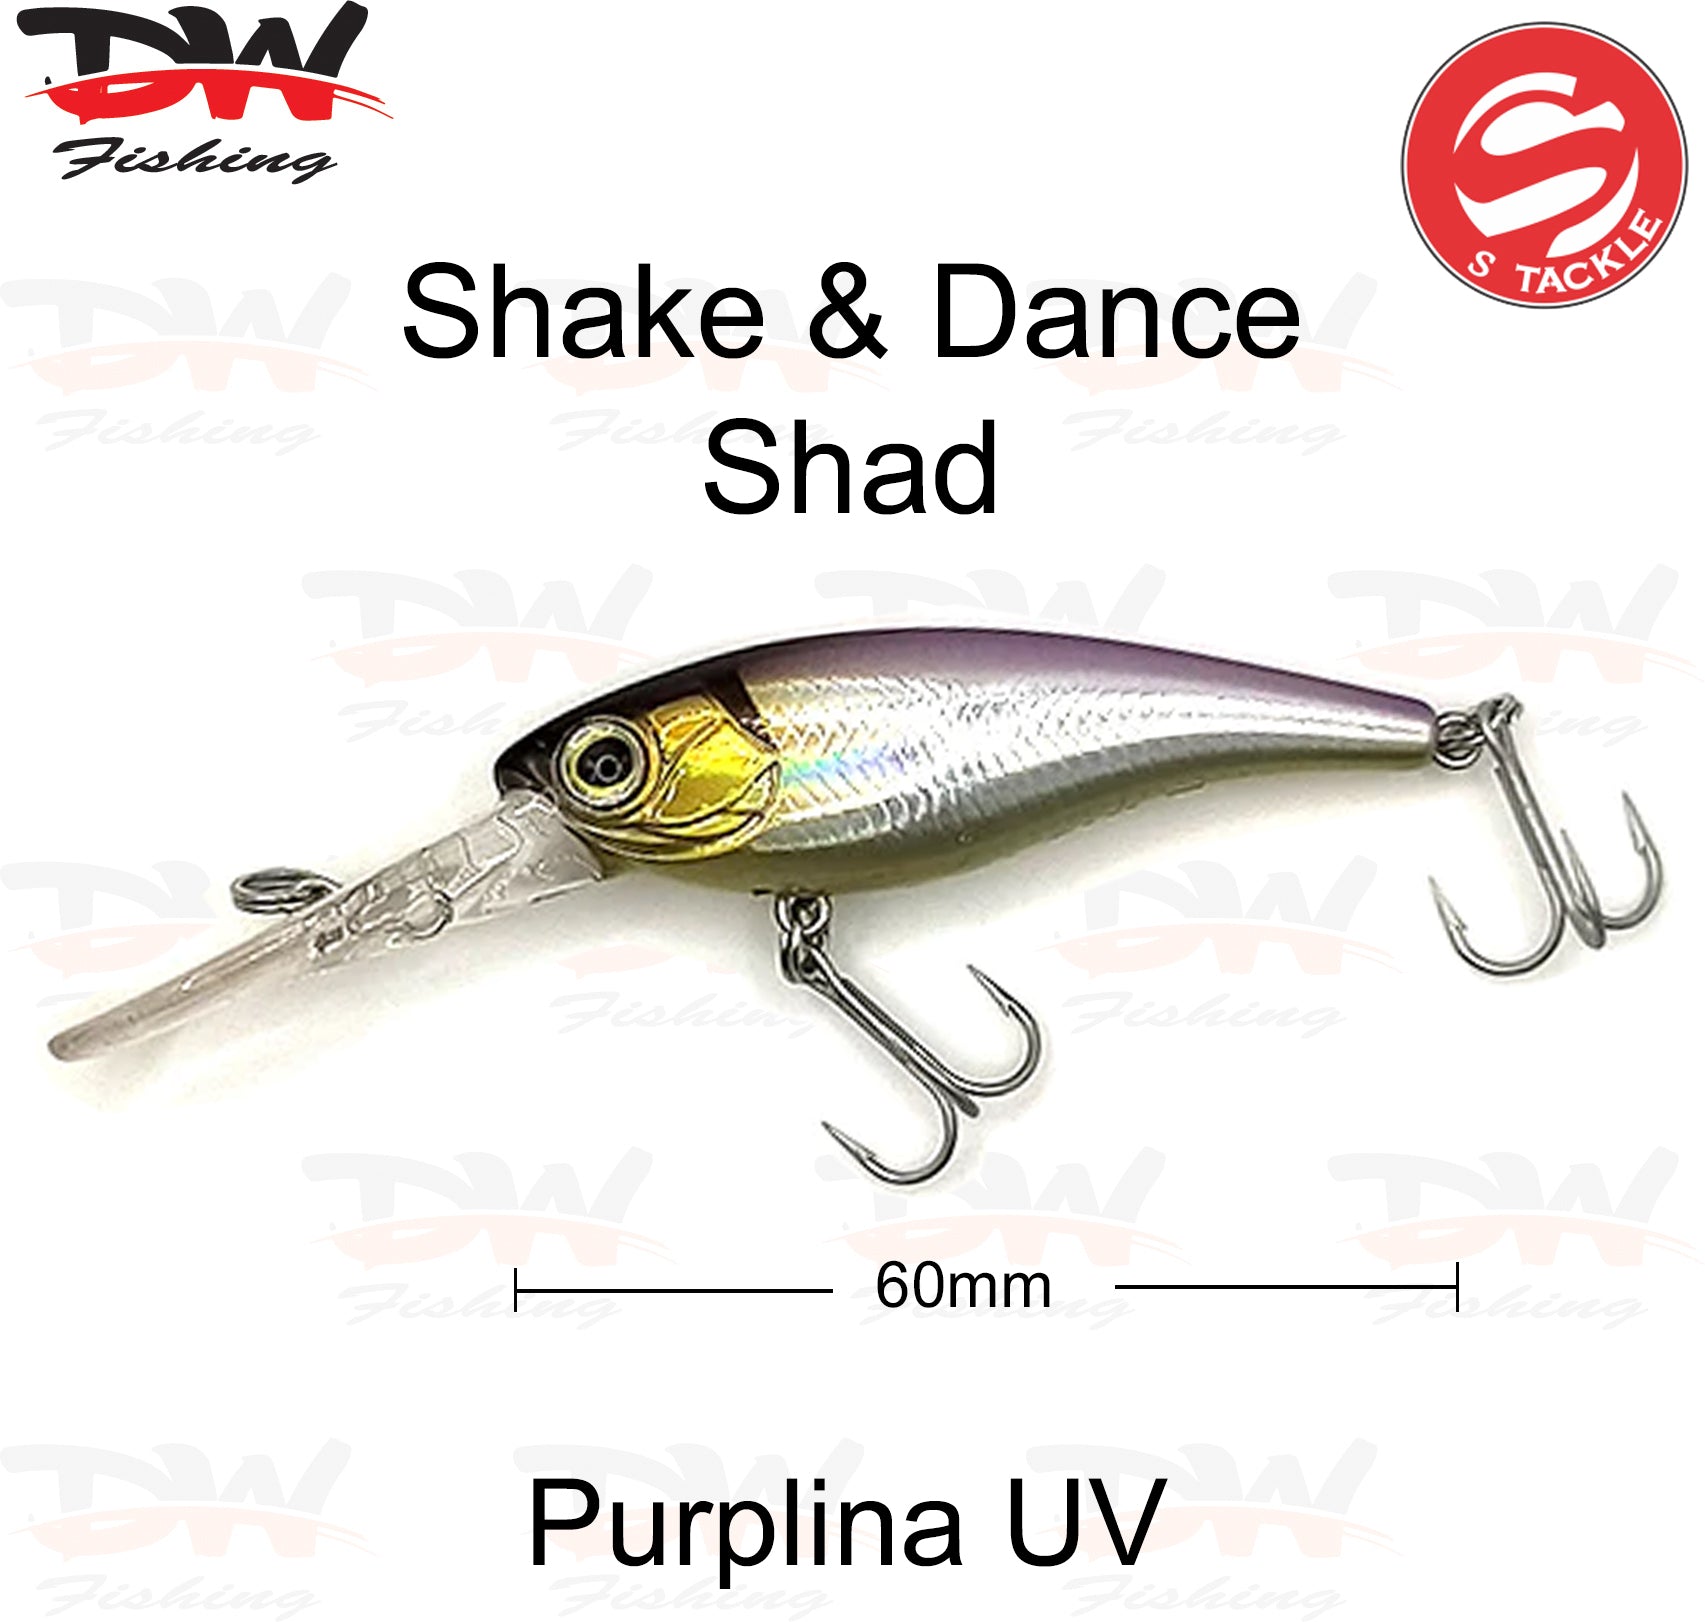 The Shake and Dance Hard Body 60mm lure colour is Purplina UV